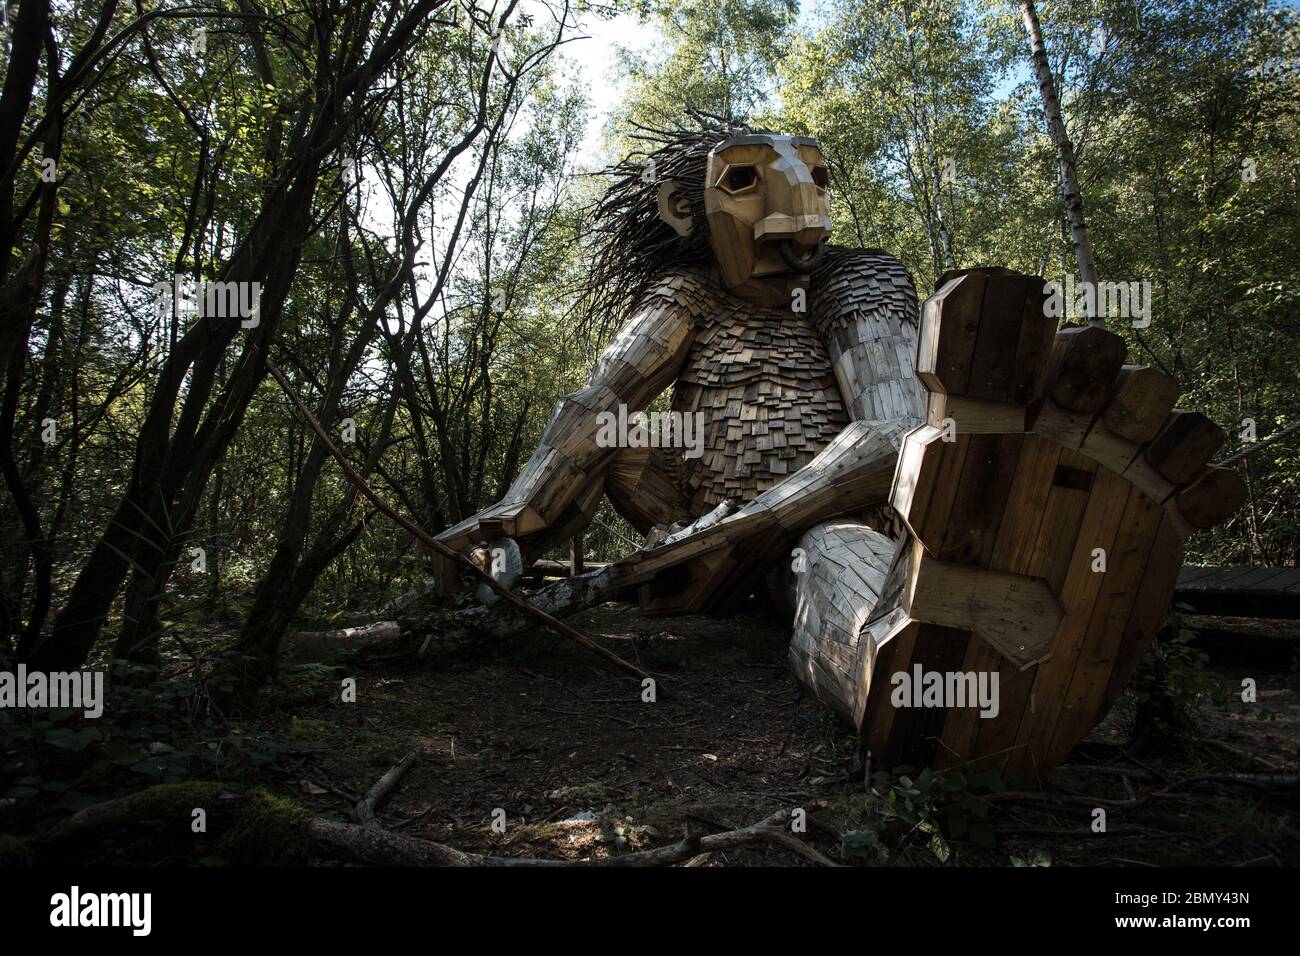 Friendly trolls in De Schorre park in Boom, Belgium by recycling artist Thomas Dambo Stock Photo